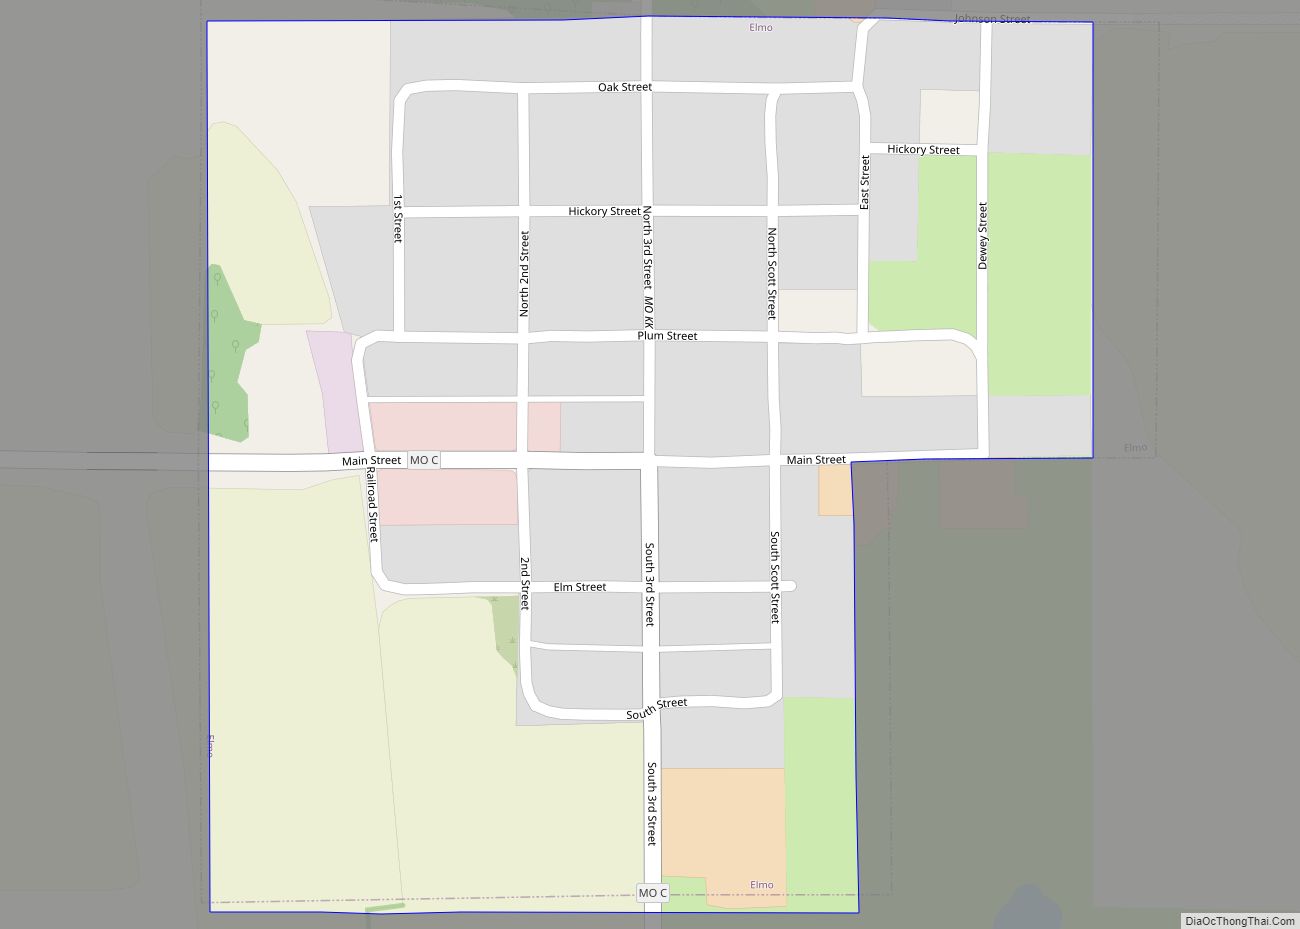 Map of Elmo city